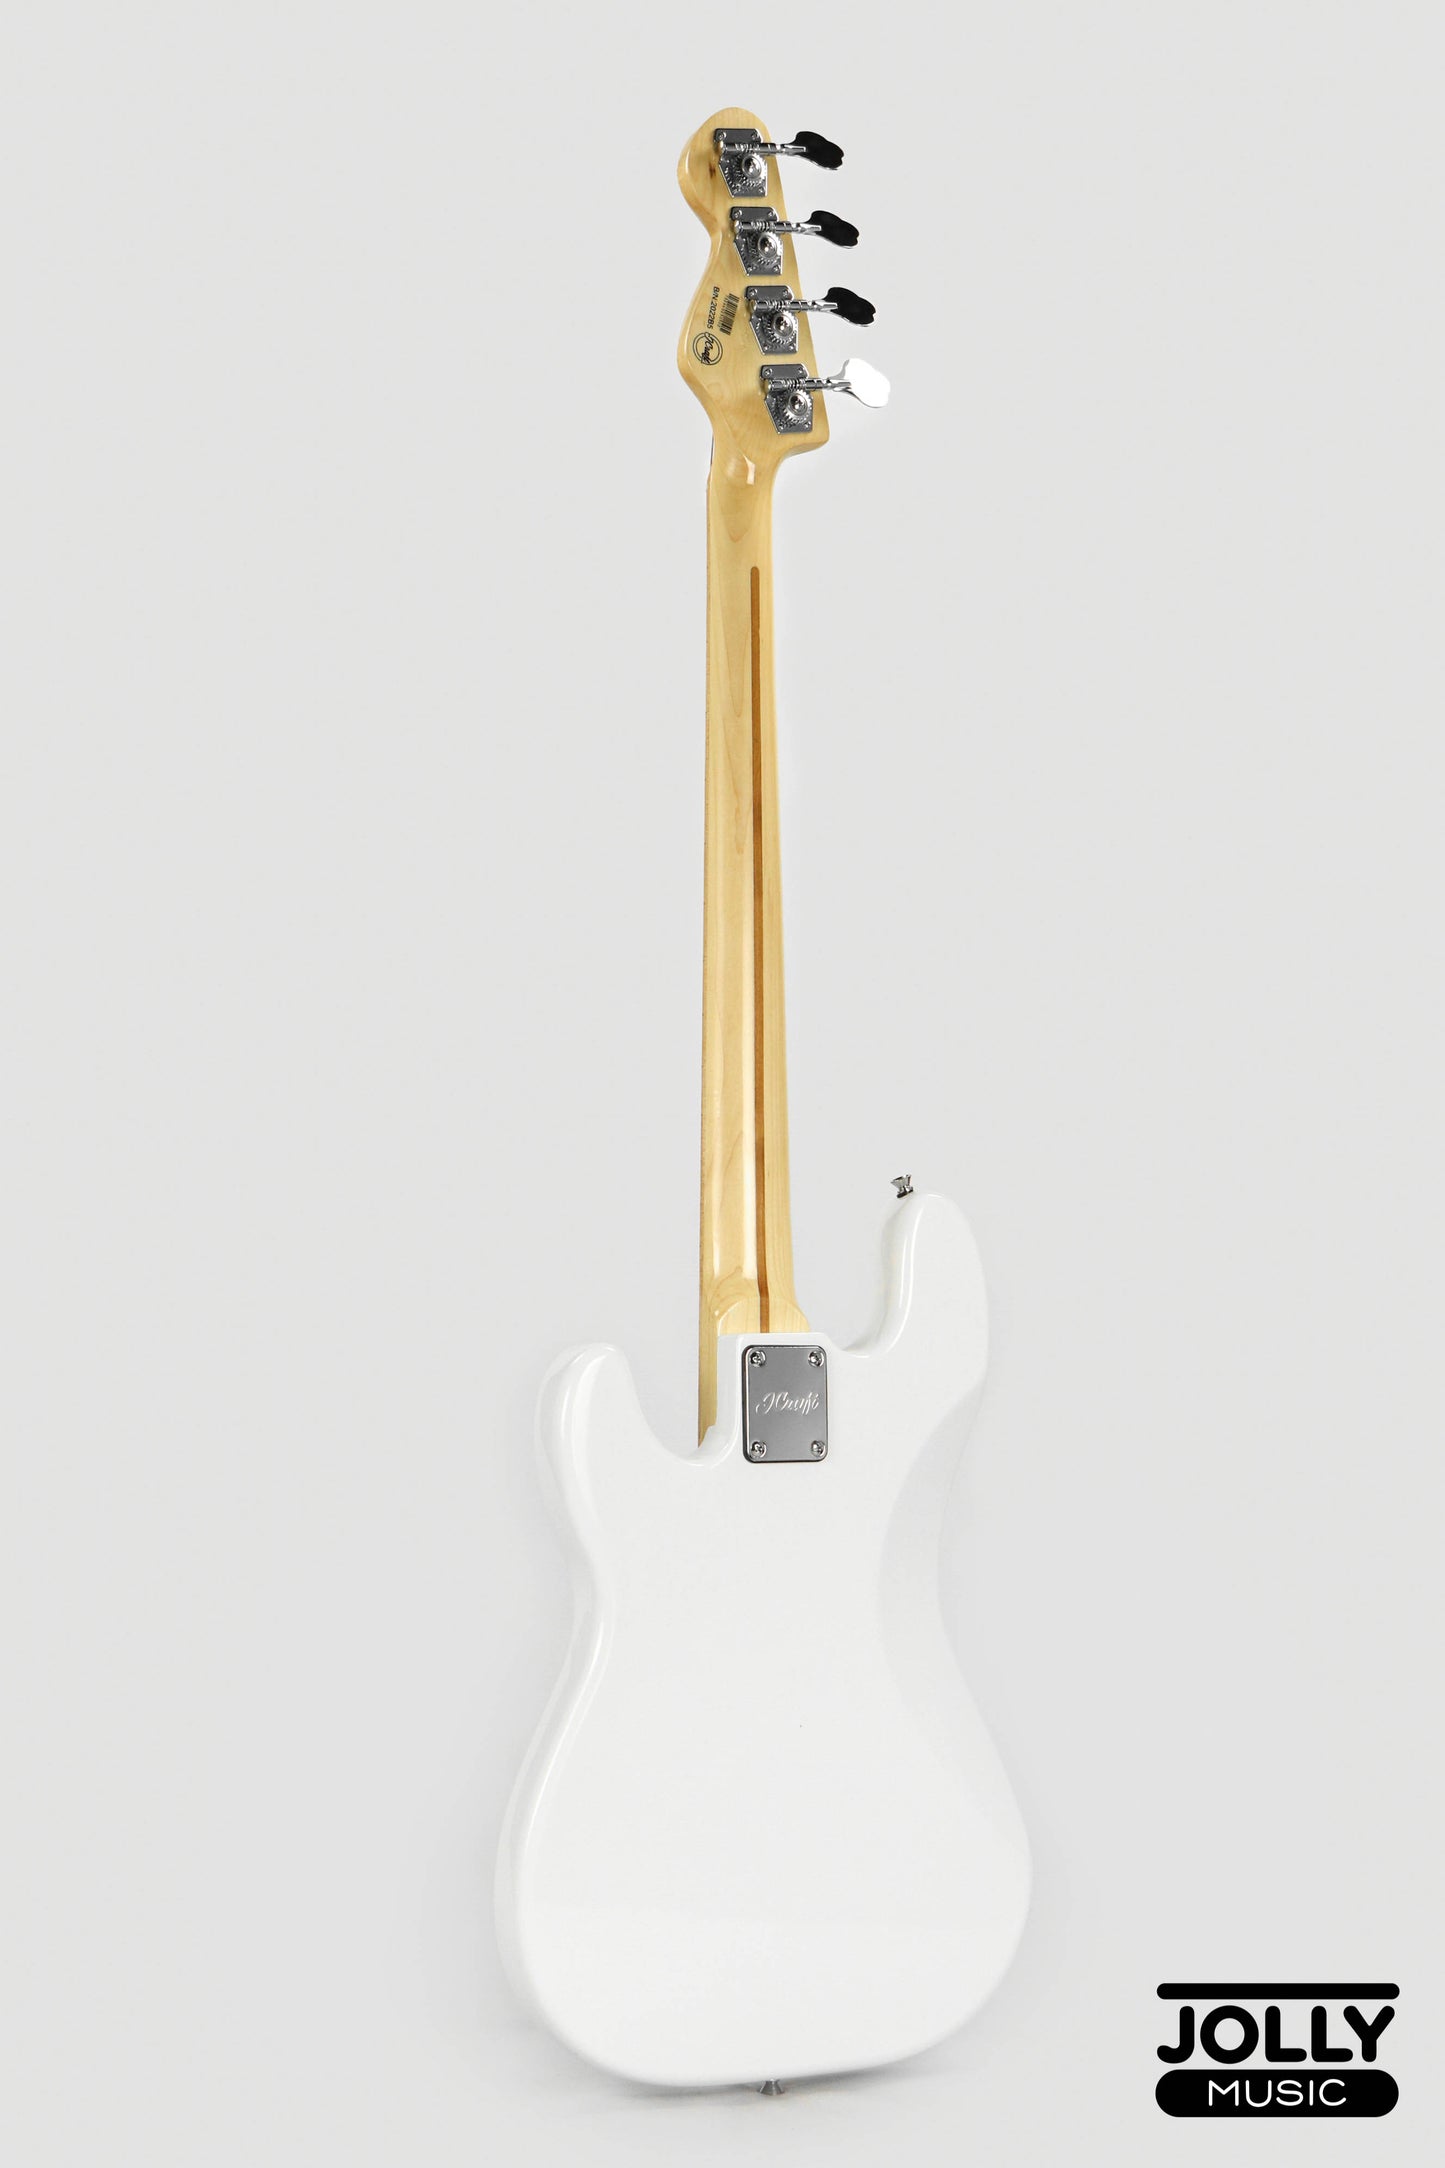 JCraft PB-2 4-String Bass Guitar -Pearl White